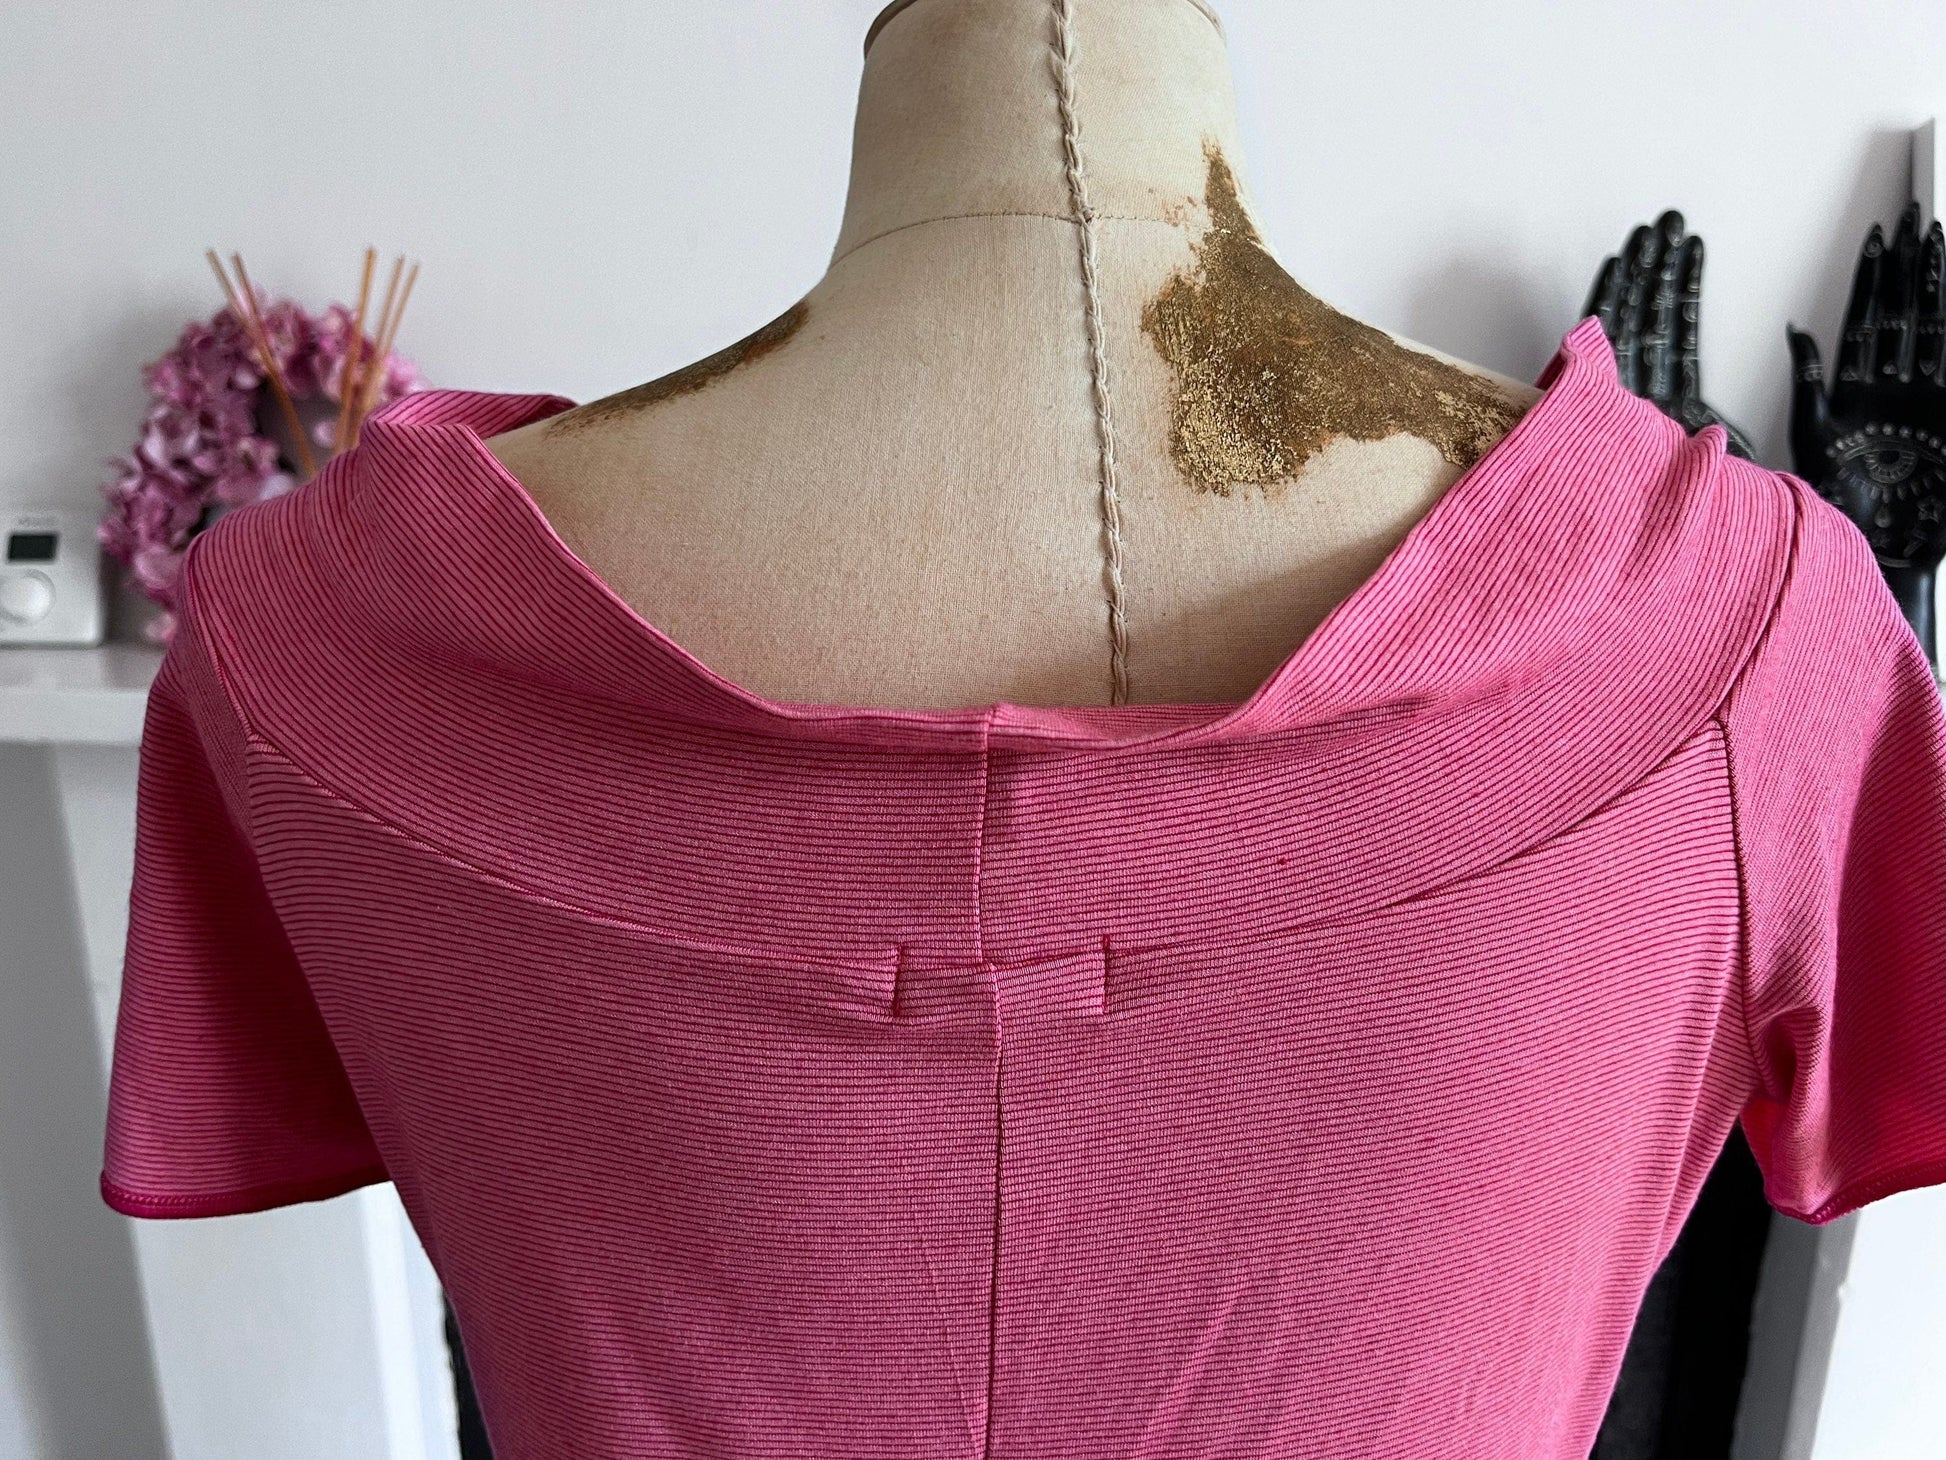 Pink Black Vintage Jersey Dress - Sunbathing Lady Dress - Off the shoulder summer dress in cute jersey fabric